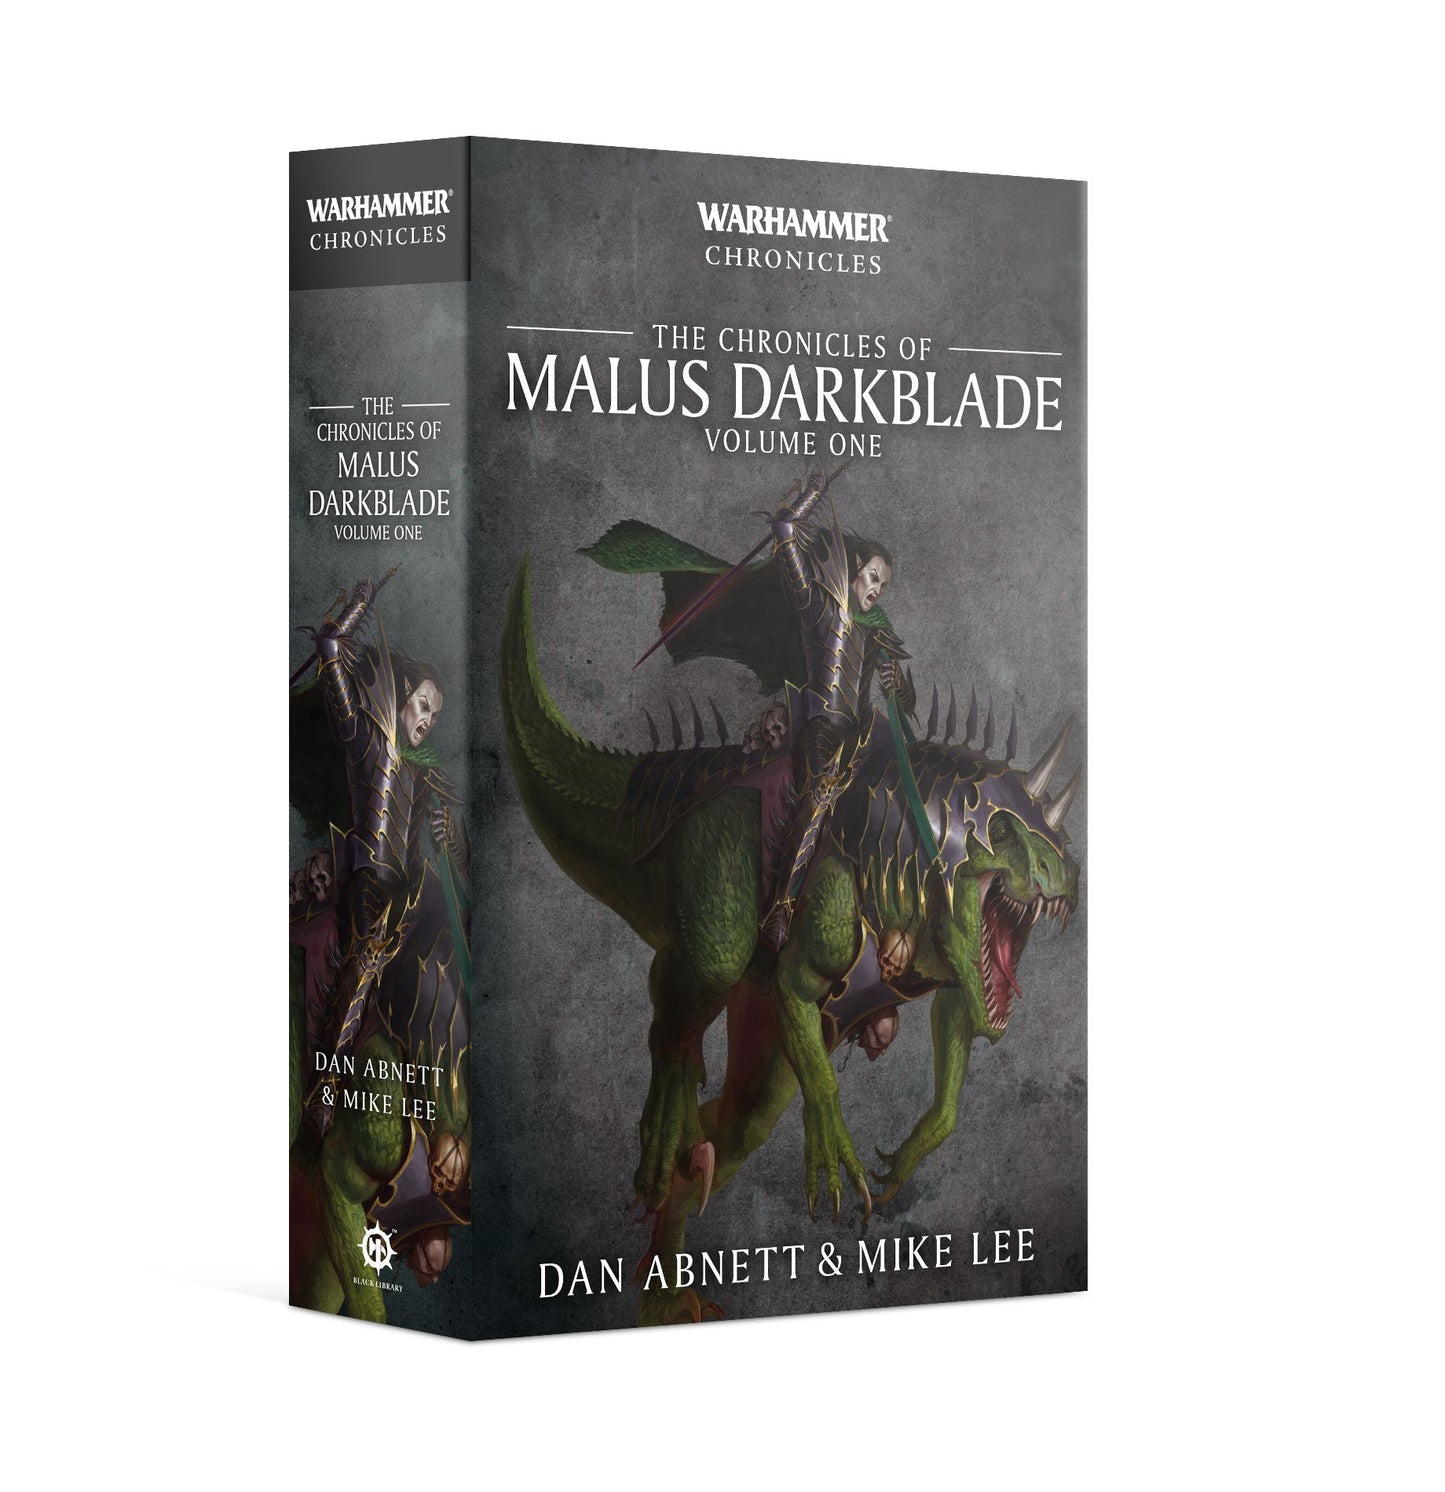 WARHAMMER CHRONICLES THE CHRONICLES OF MALUS DARKBLADE VOLUME 01